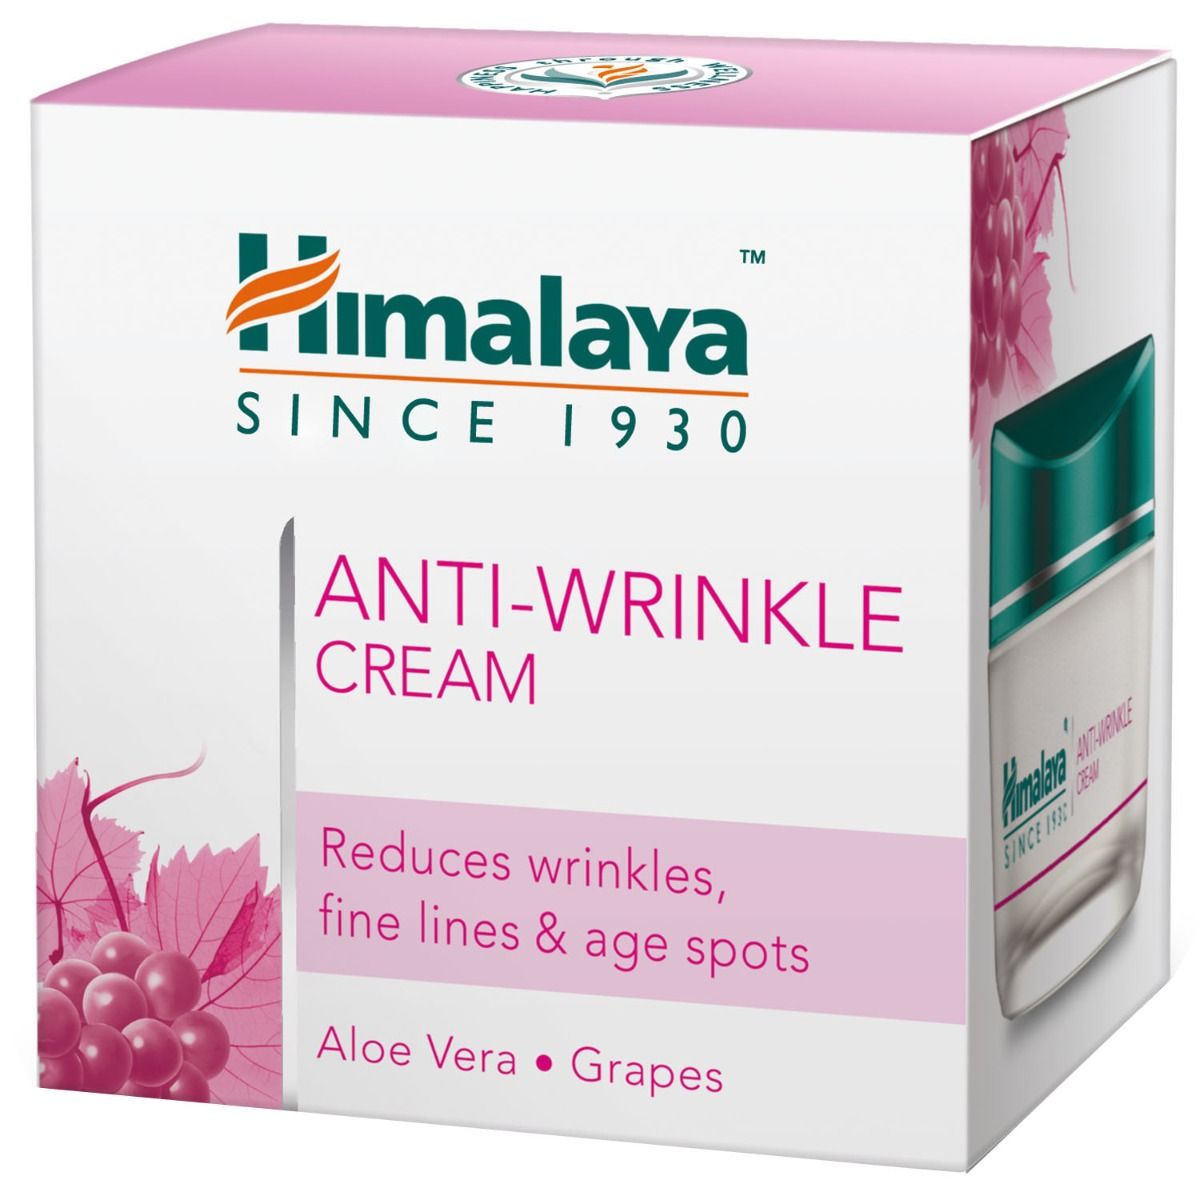 himalaya anti wrinkle cream ingredients)